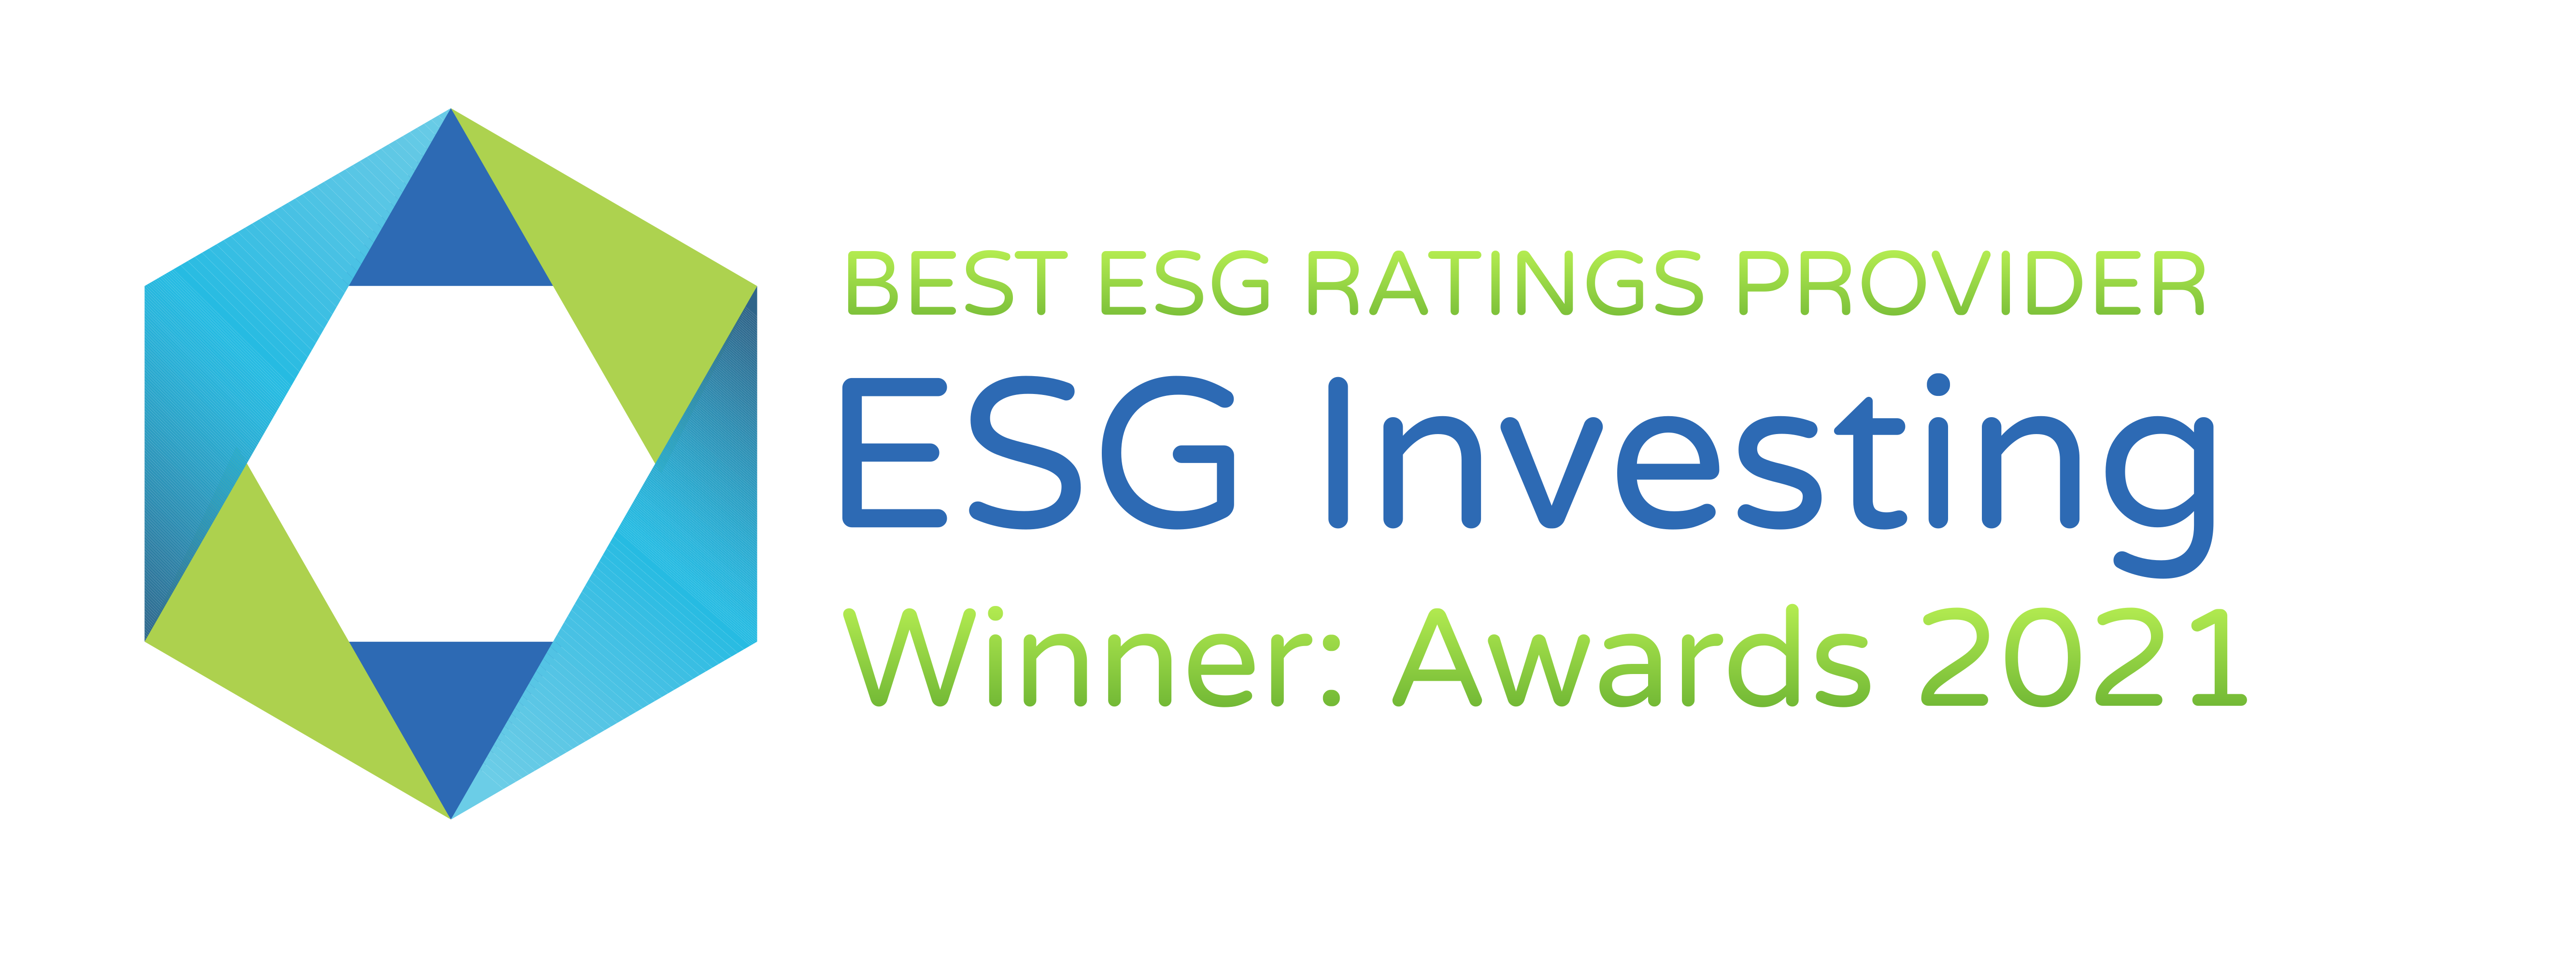 ESD investing Best ESG ratings provider